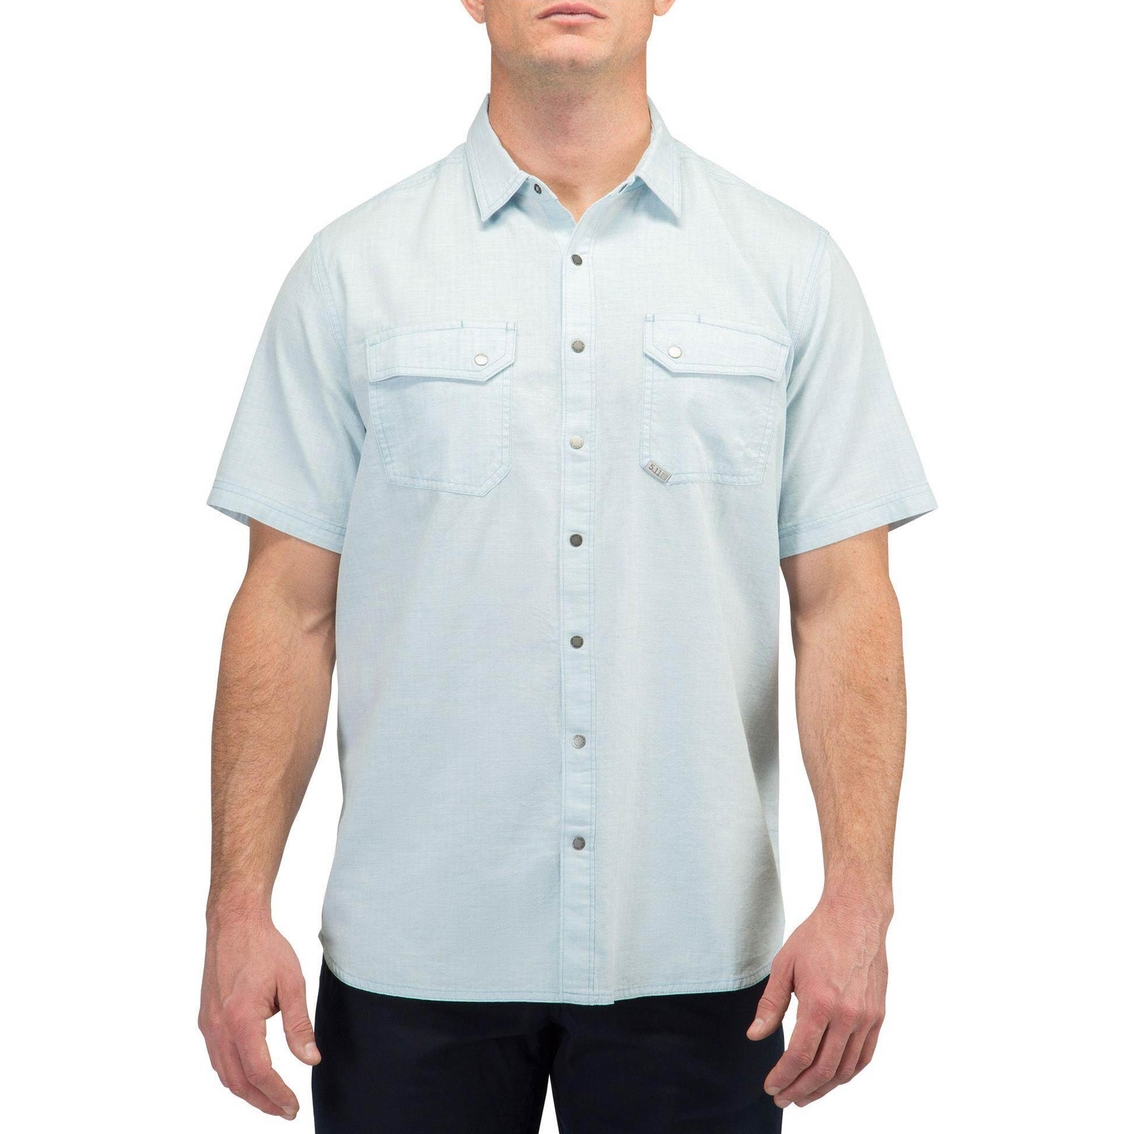 5.11 Herringbone Shirt | Shirts & Tops | Military | Shop The Exchange